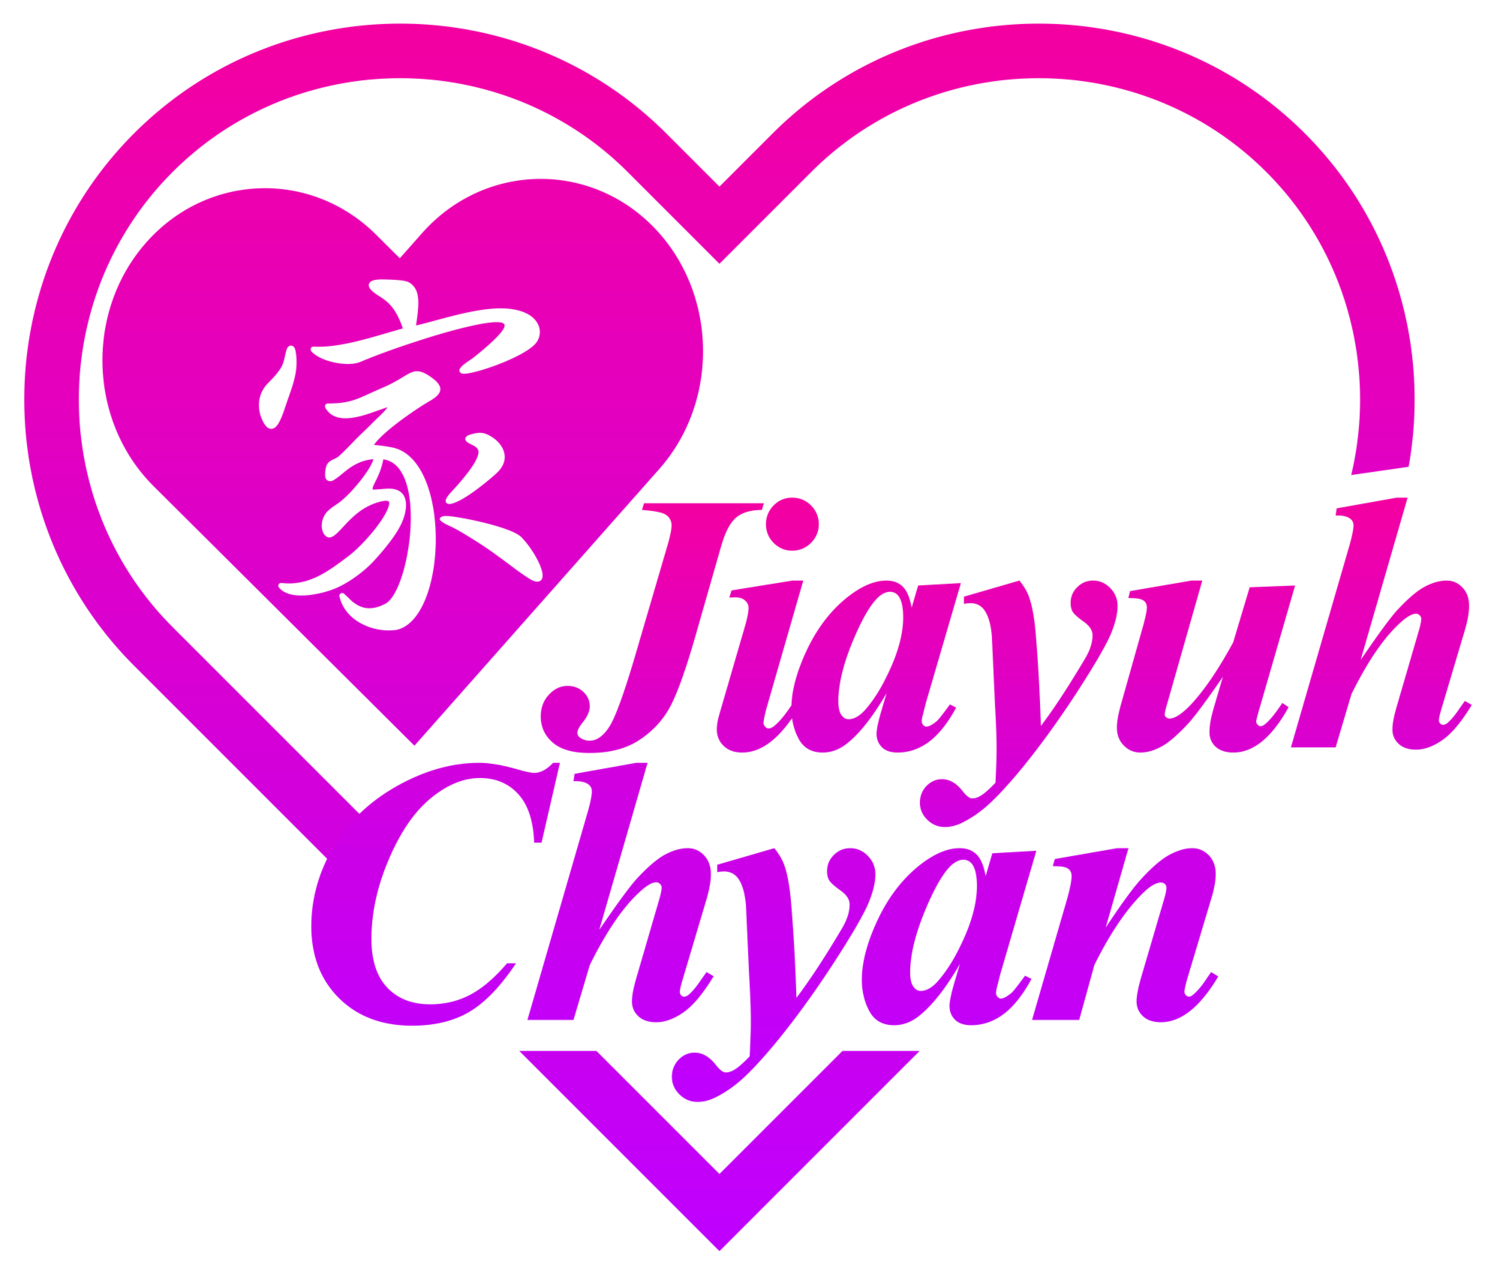 Jiayuh Chyan